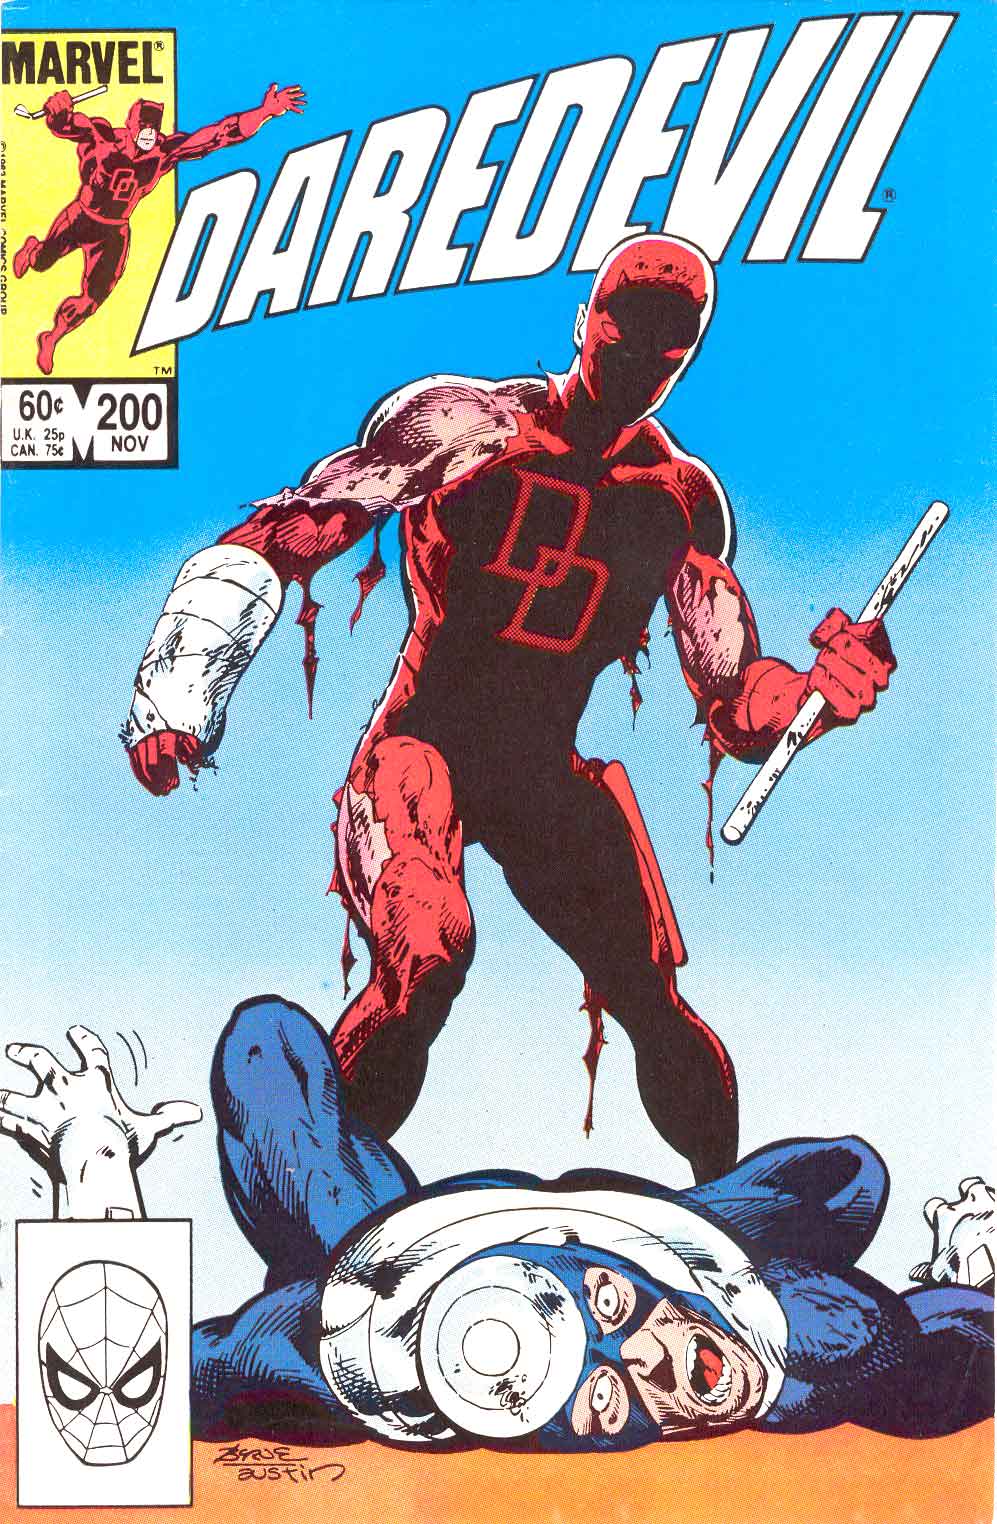 Daredevil v1 #200 marvel comic book cover art by John Byrne